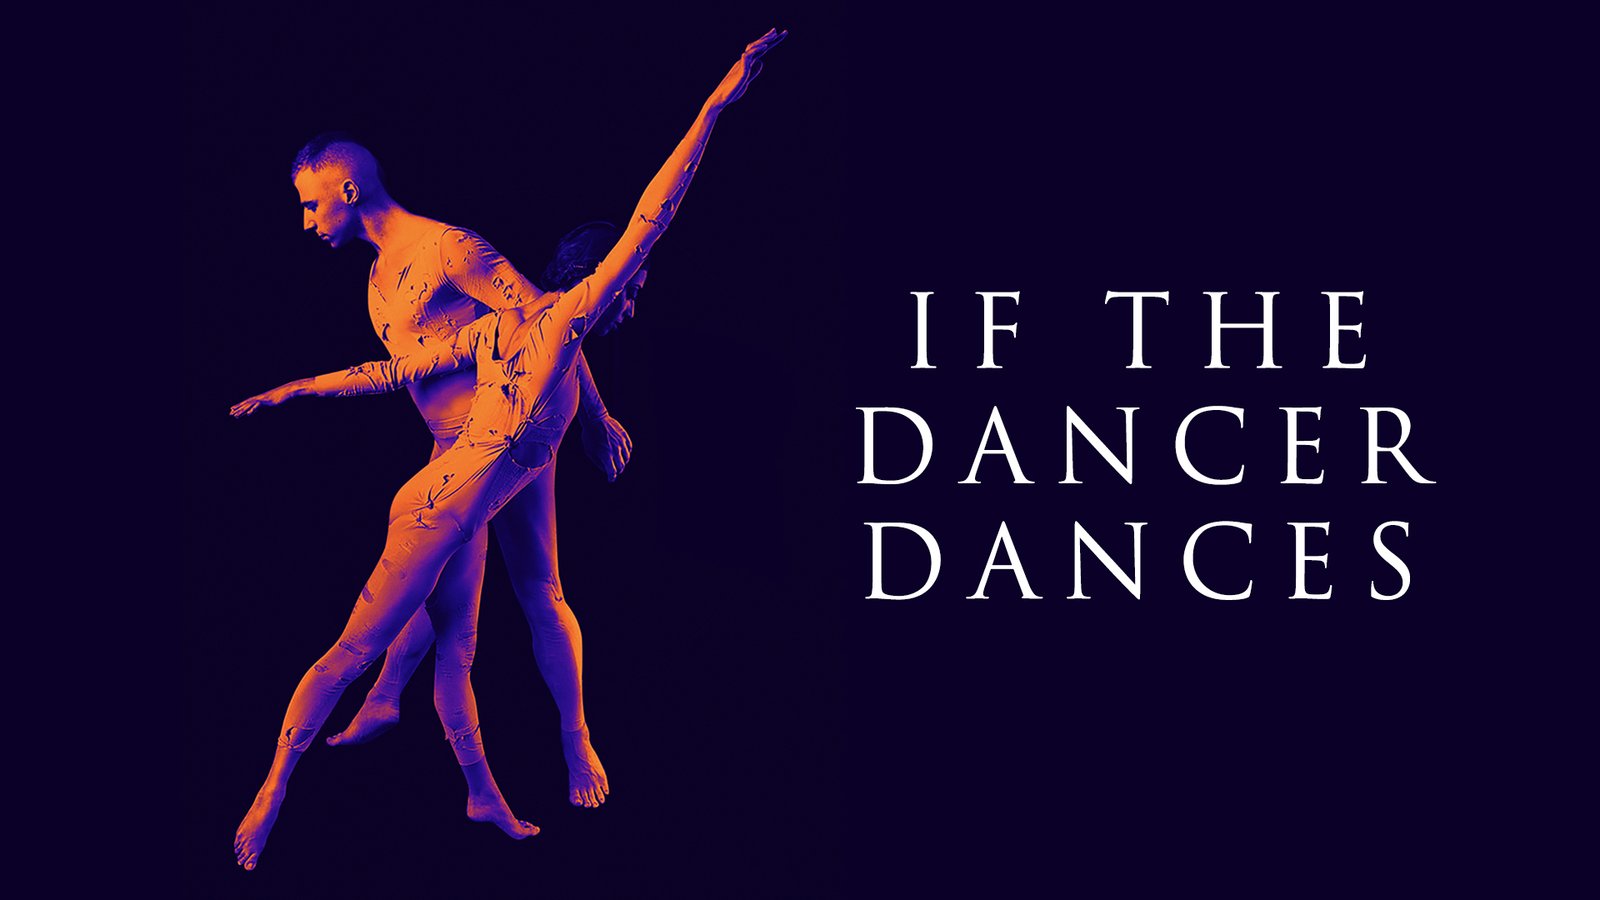 If The Dancer Dances